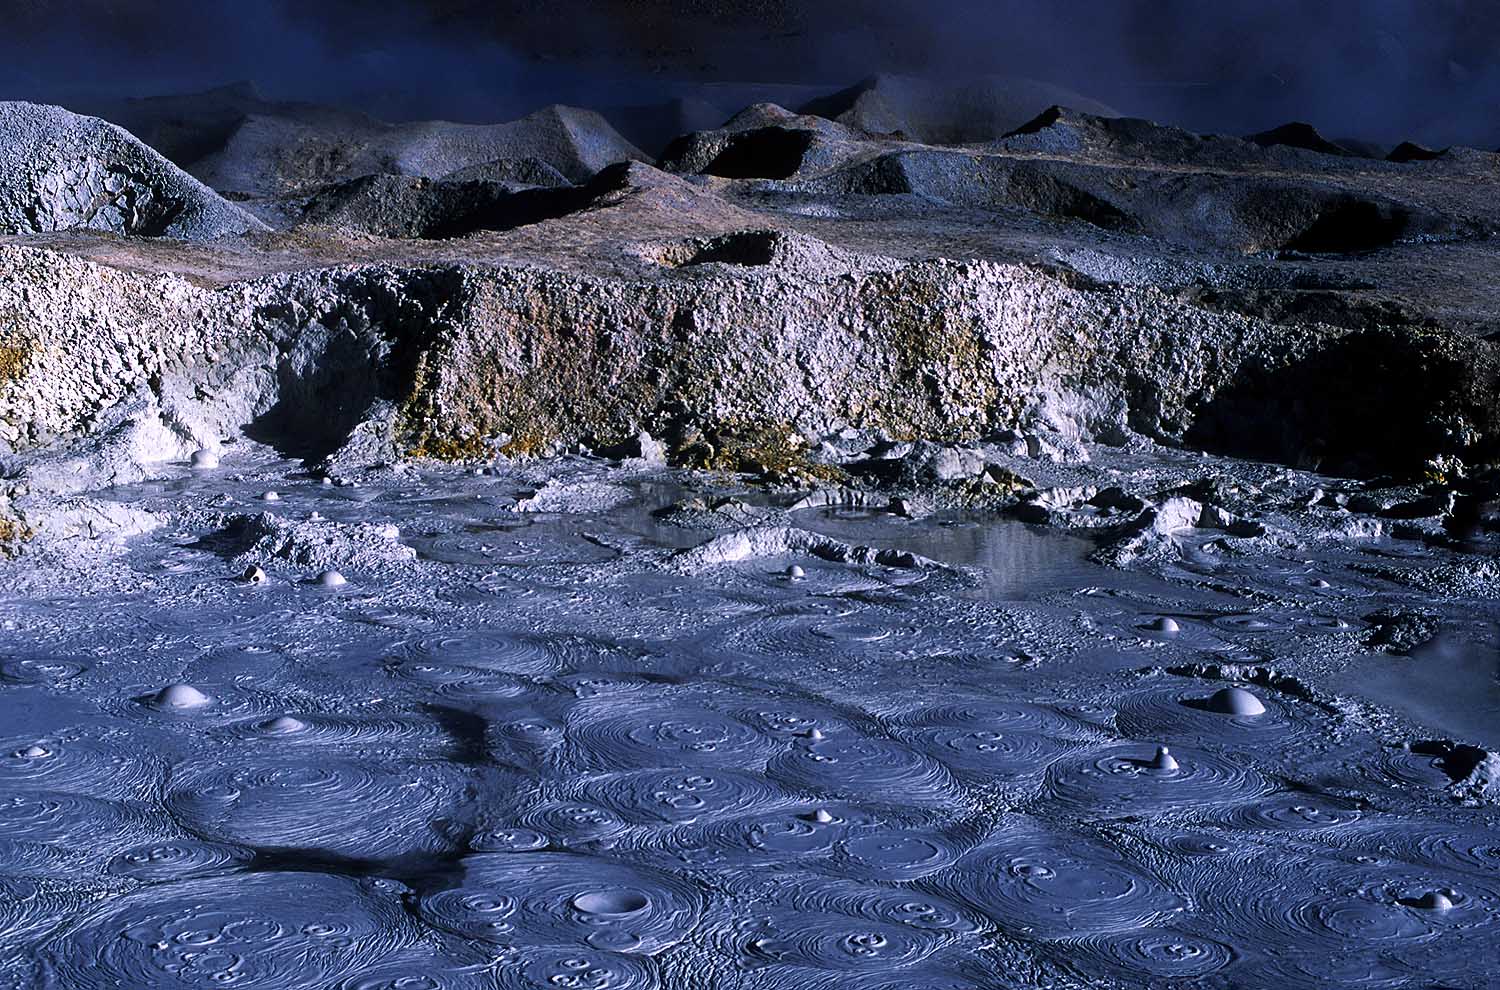 Volcanic site - pools of boiling mud in an array of colors.Sitio volcánico - piscinas multicolores de fango hirviendo.